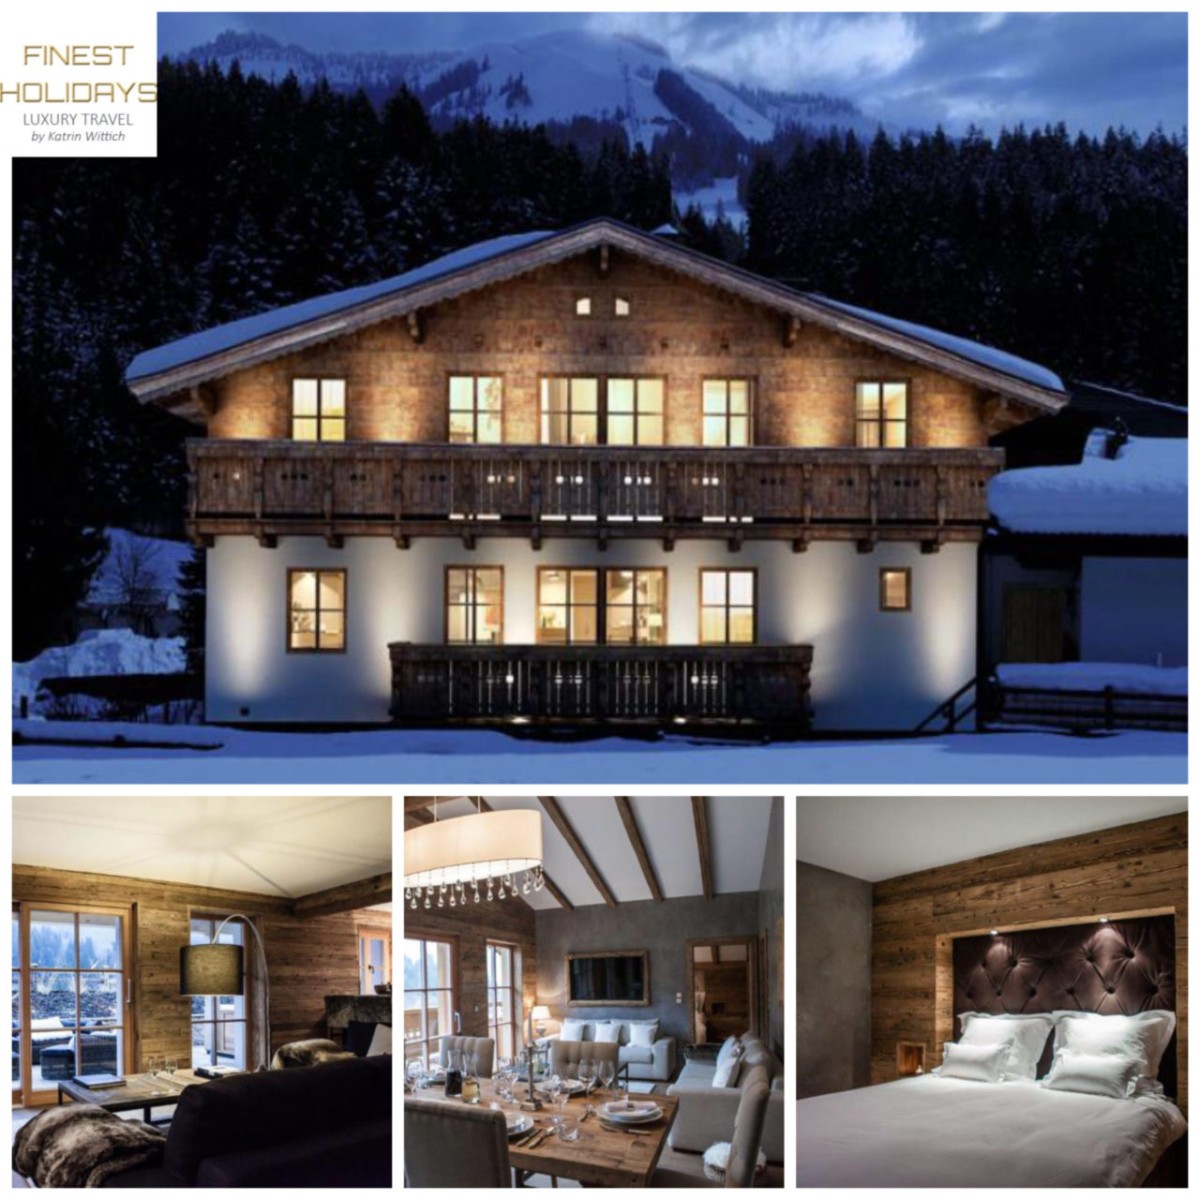 Austrian ski resort Kitzbühel – Chalet Kitz sleeps 14 guests